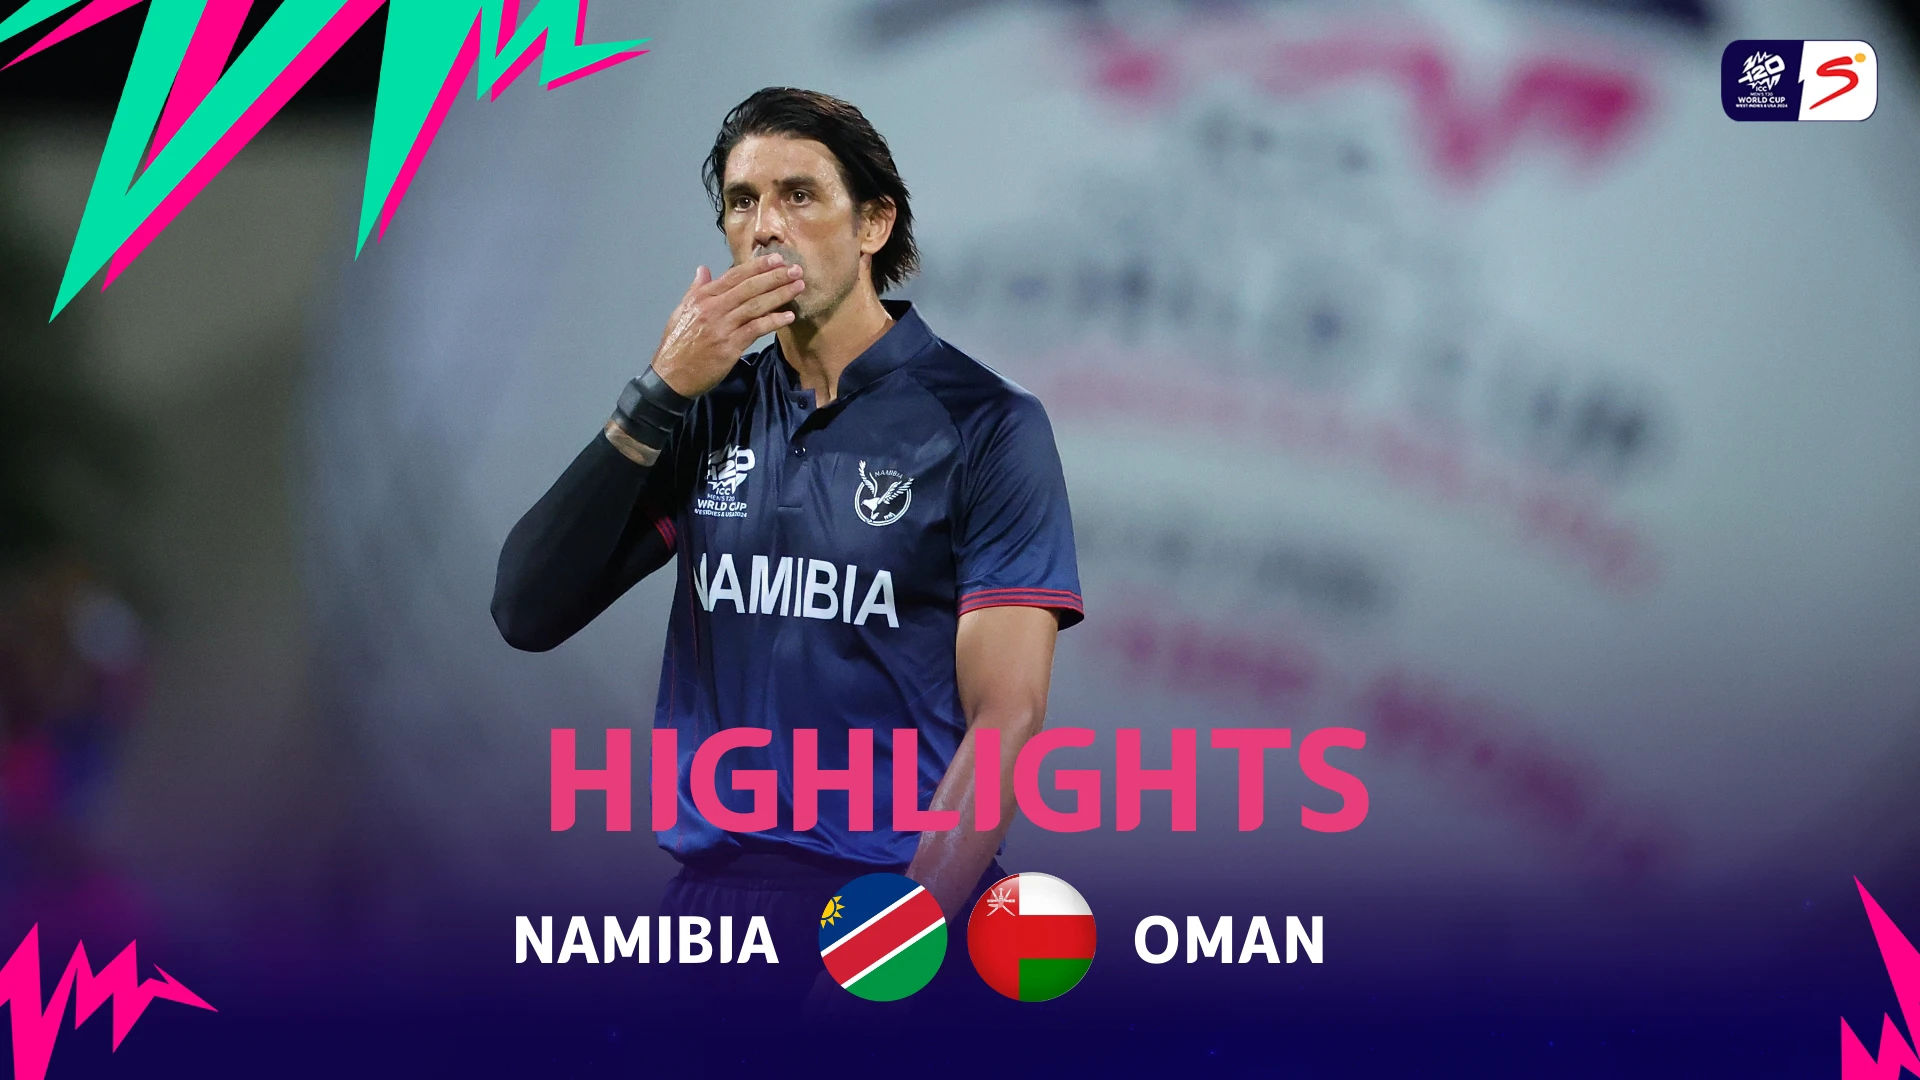 Namibia v Oman | Match Highlights | ICC T20 World Cup Group B